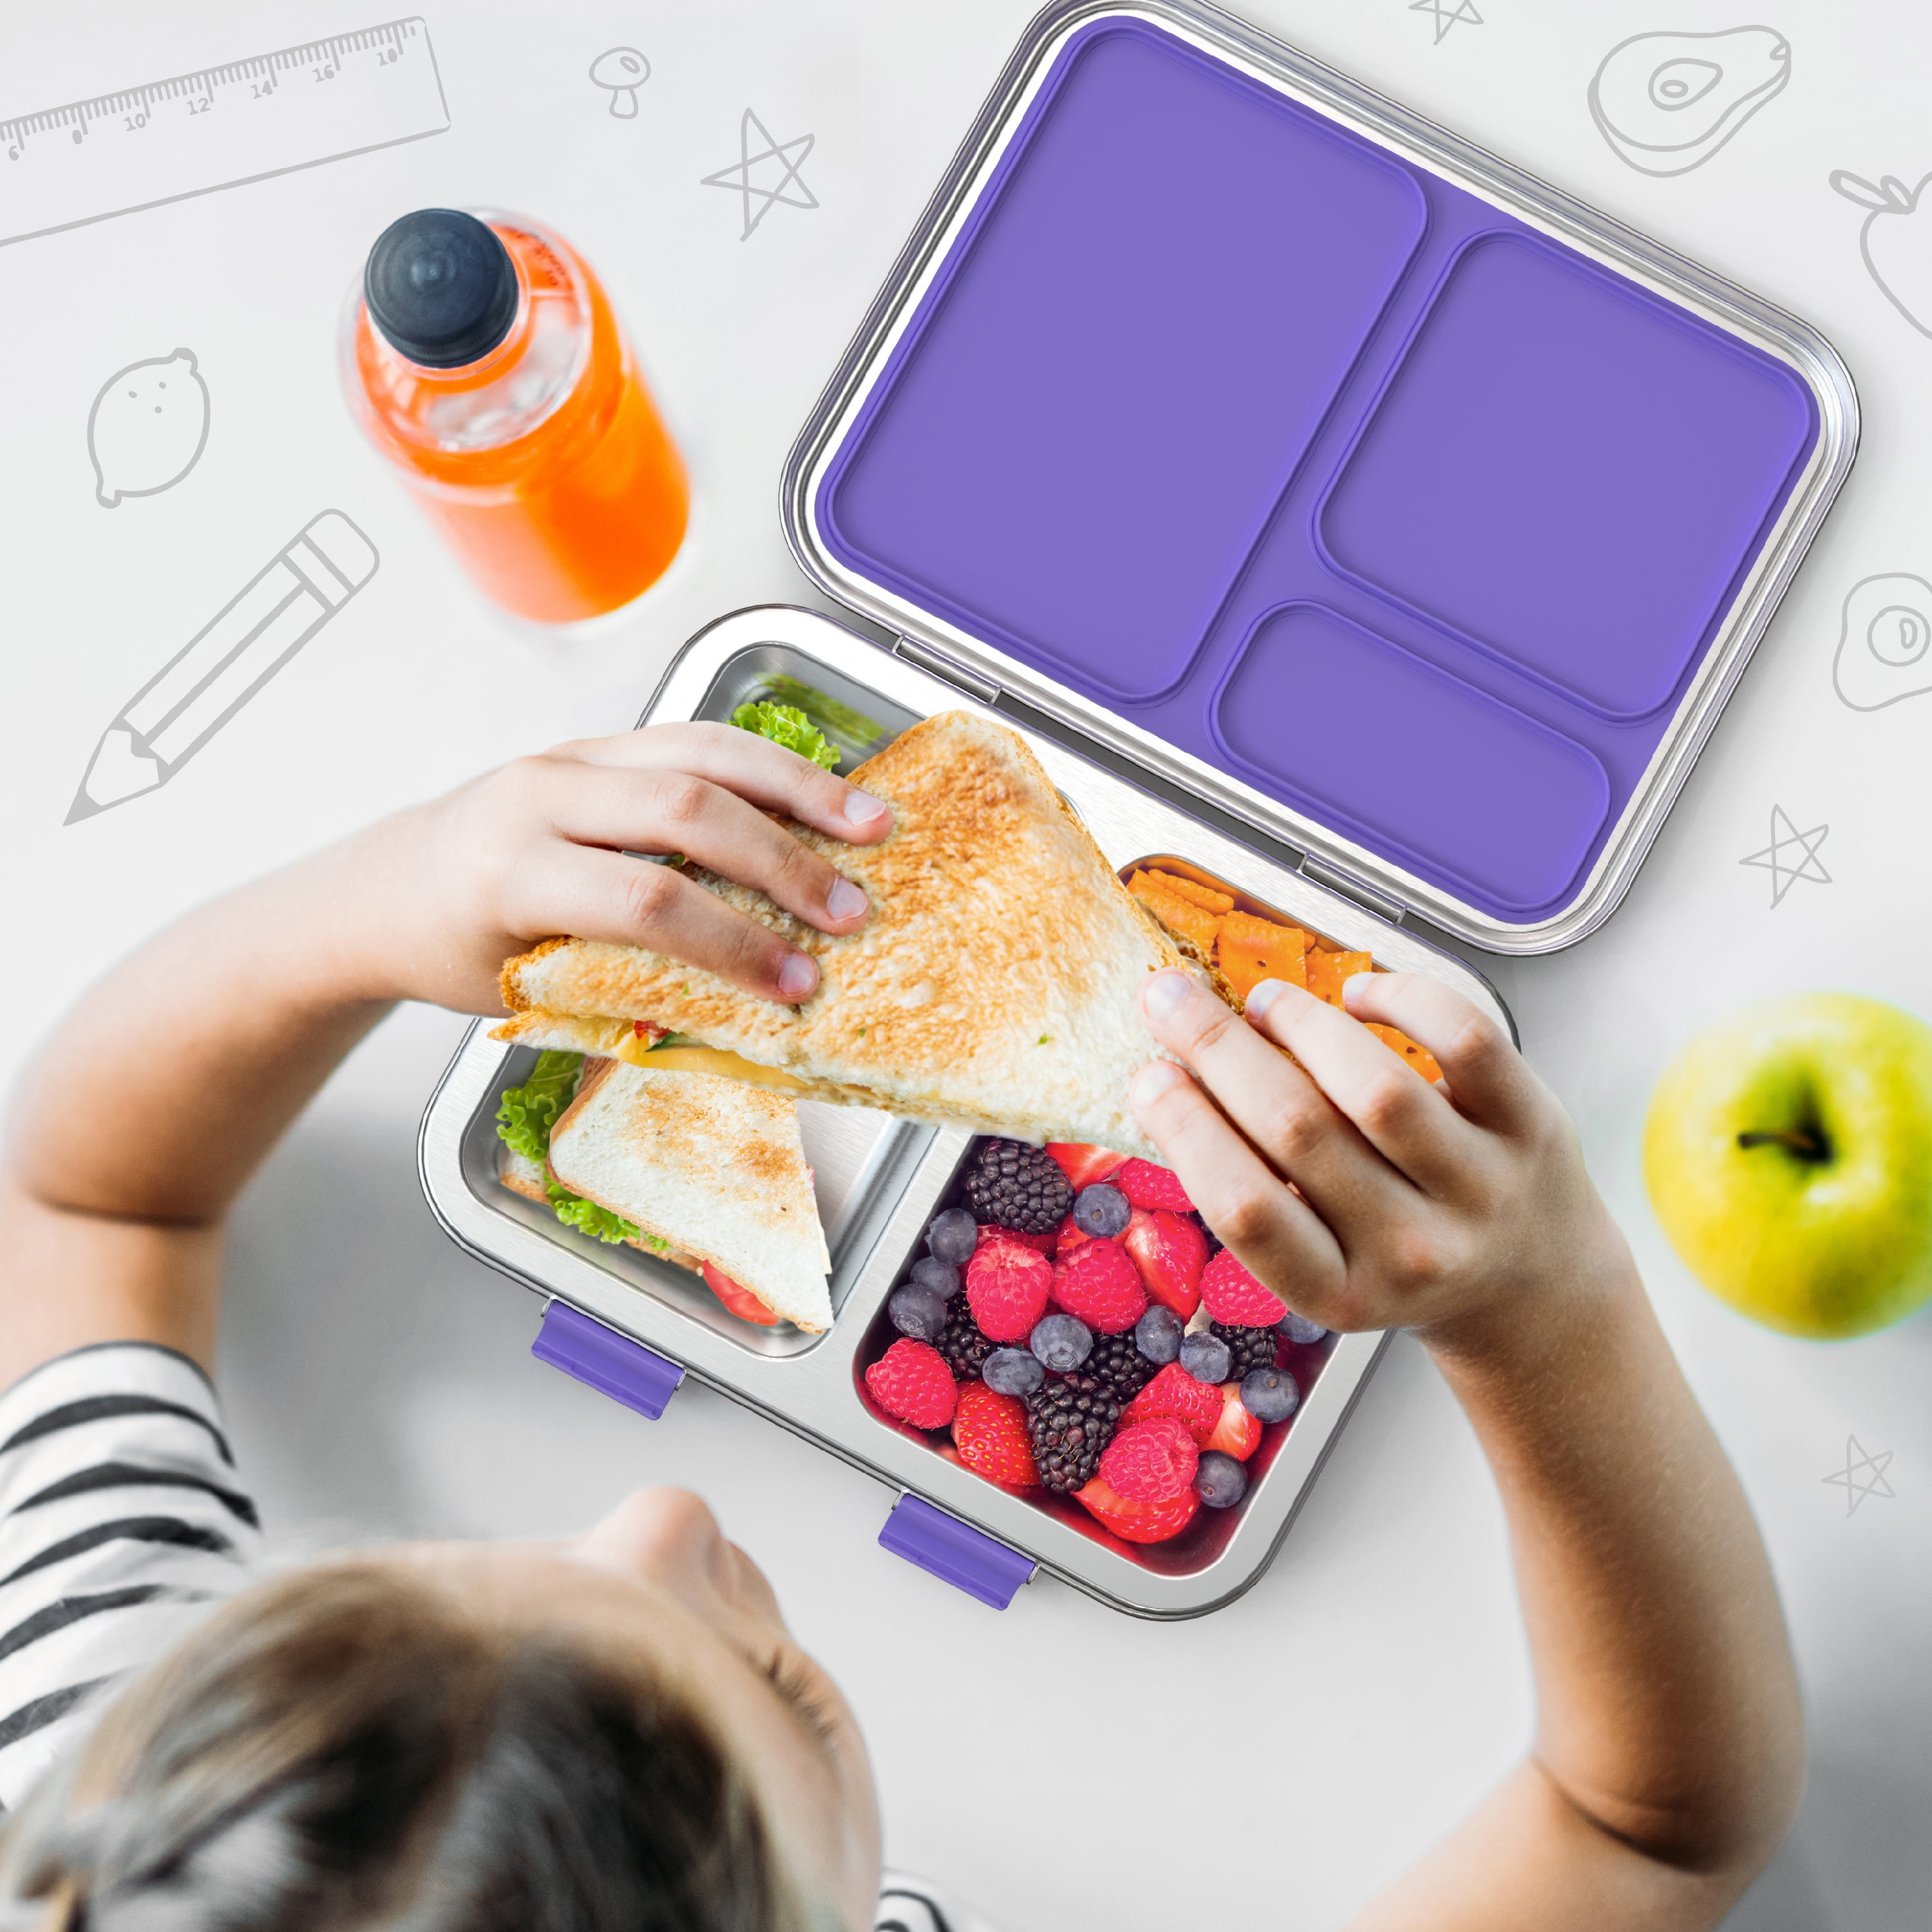 Bentgo Kids Durable & Leak Proof Unicorn Children's Lunch Box - Purple, 1  ct - Baker's